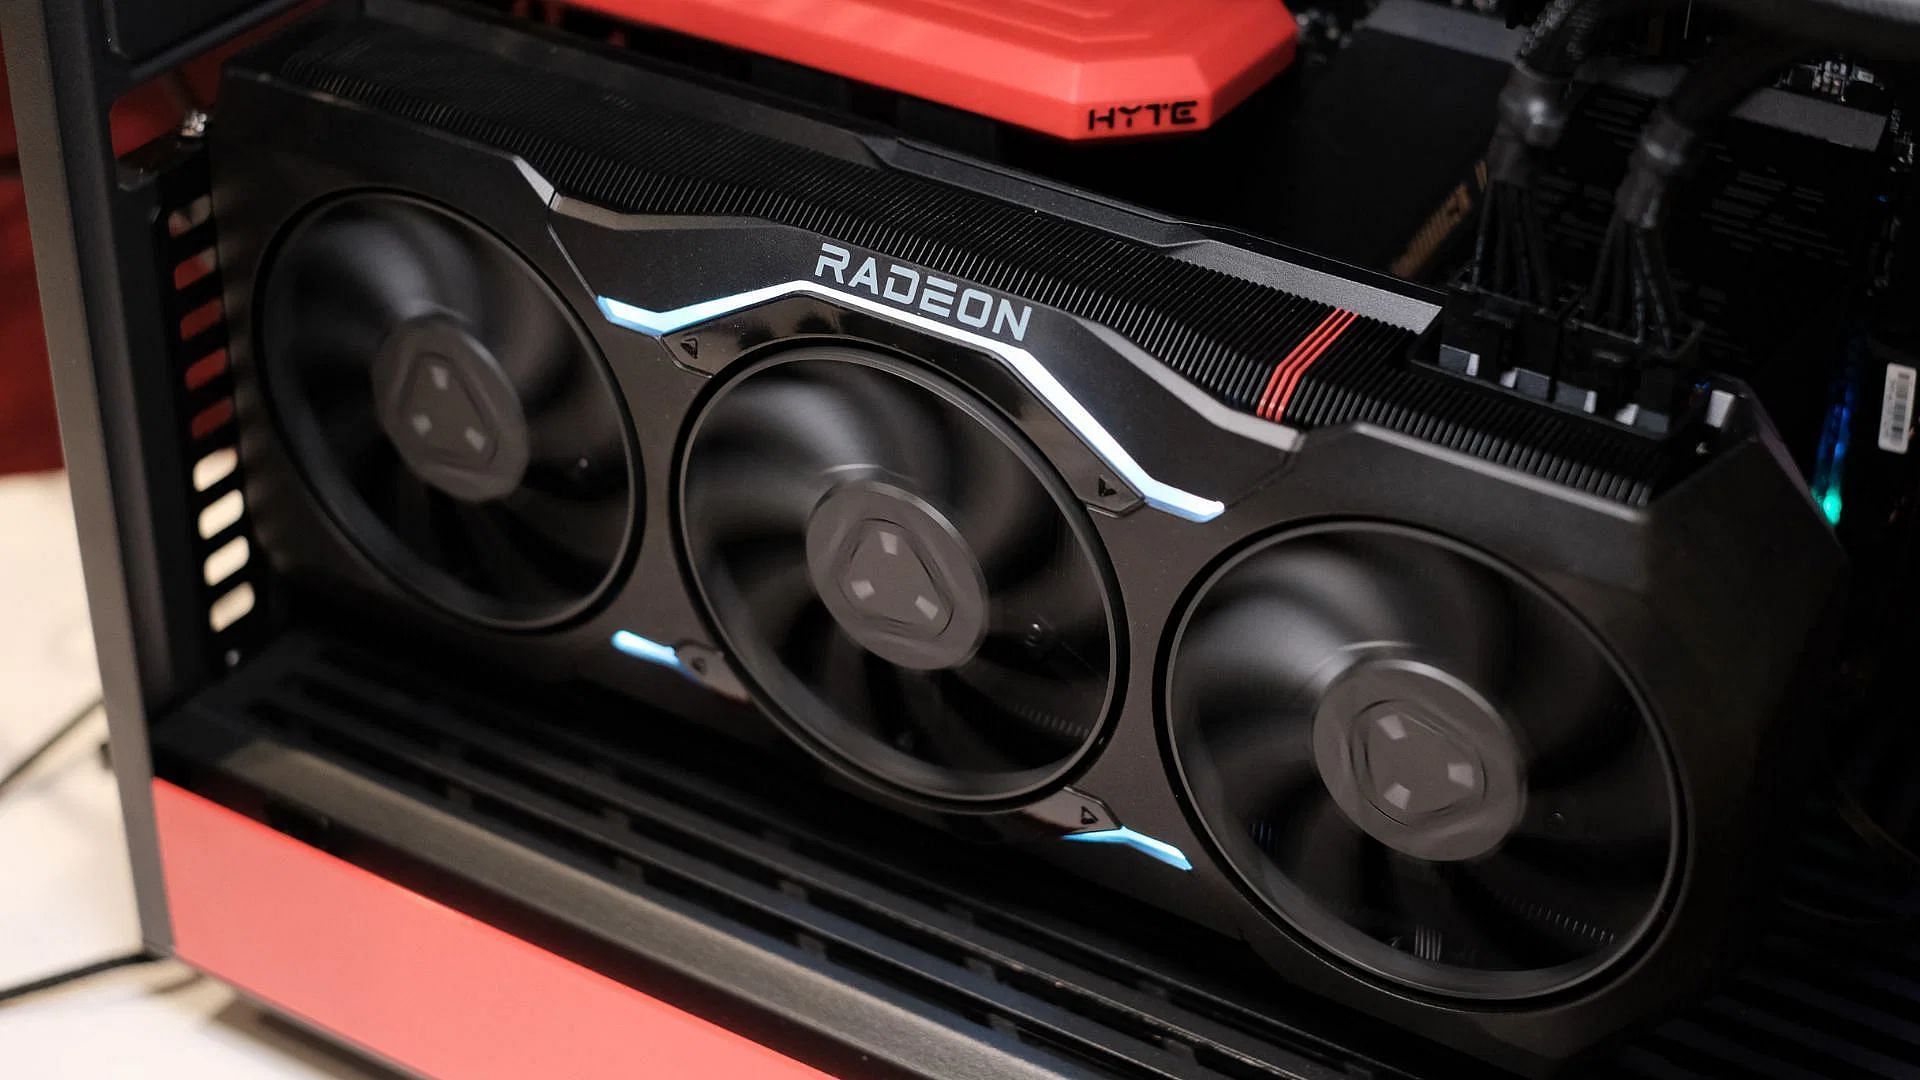  Radeon RX 7000 series GPU (Image via @BradChacos/Twitter)